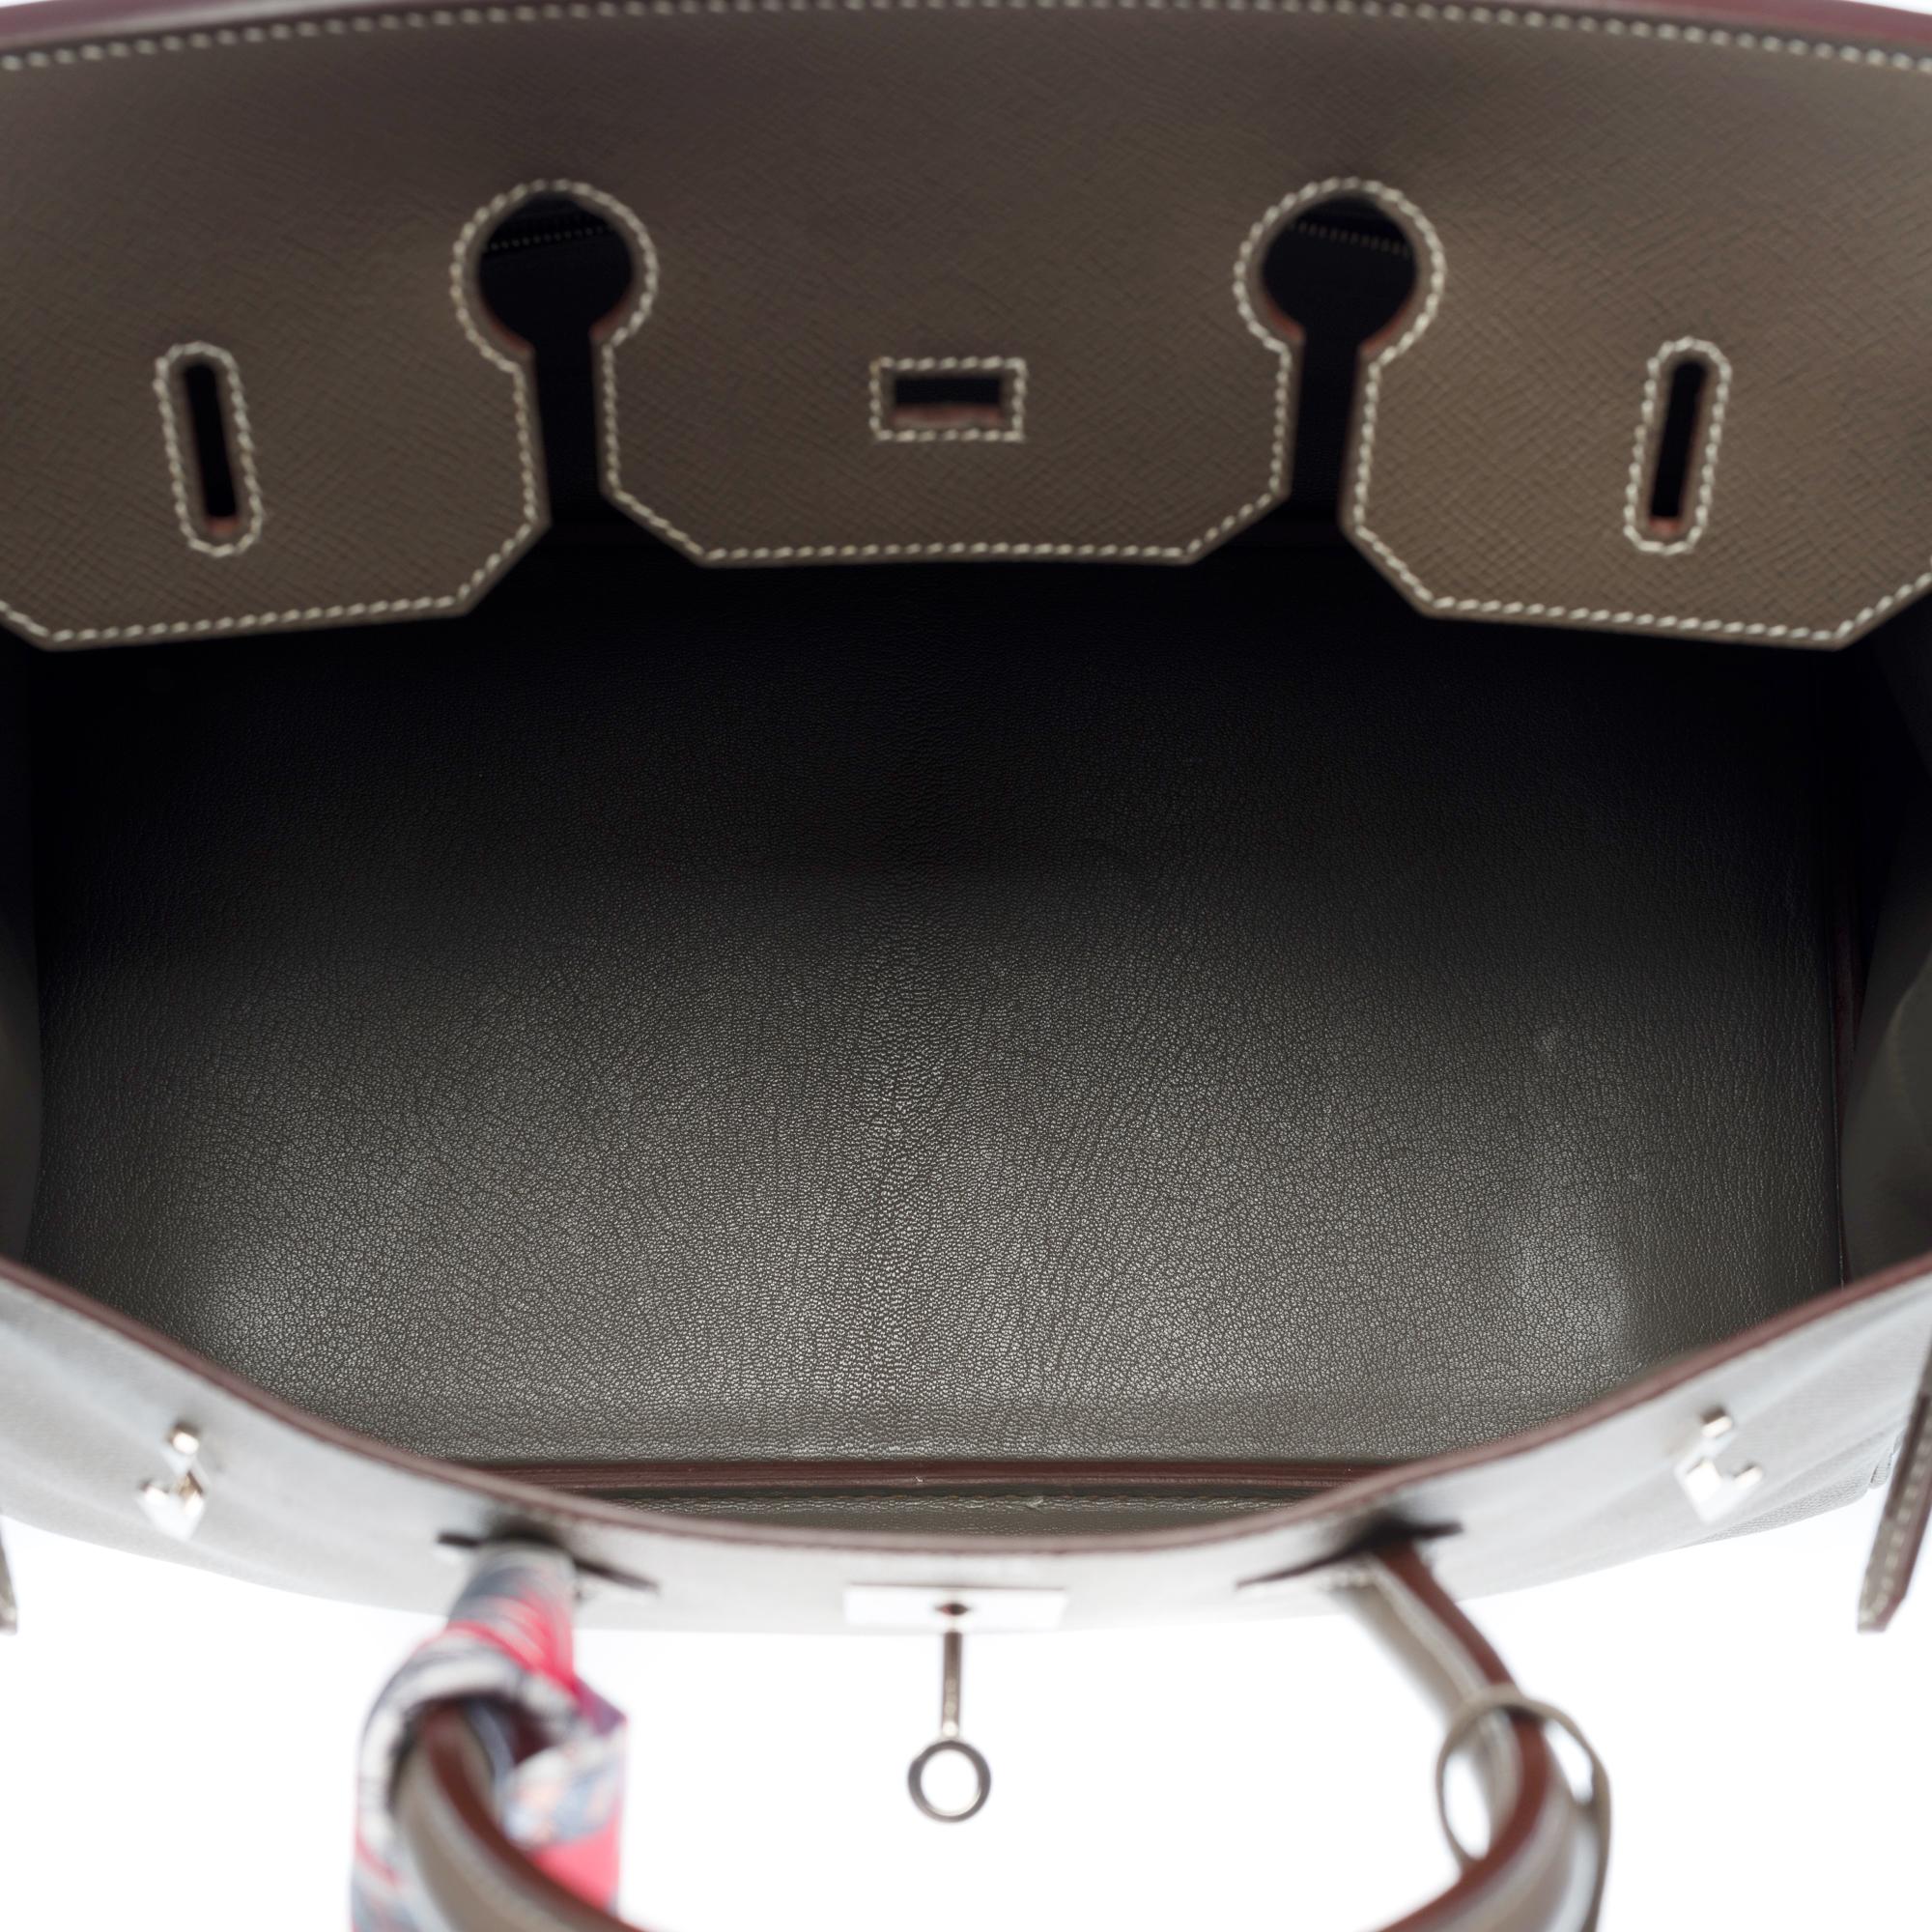 Hermès Birkin 35 HSS (Special Order) handbag in etoupe epsom leather, SHW 1